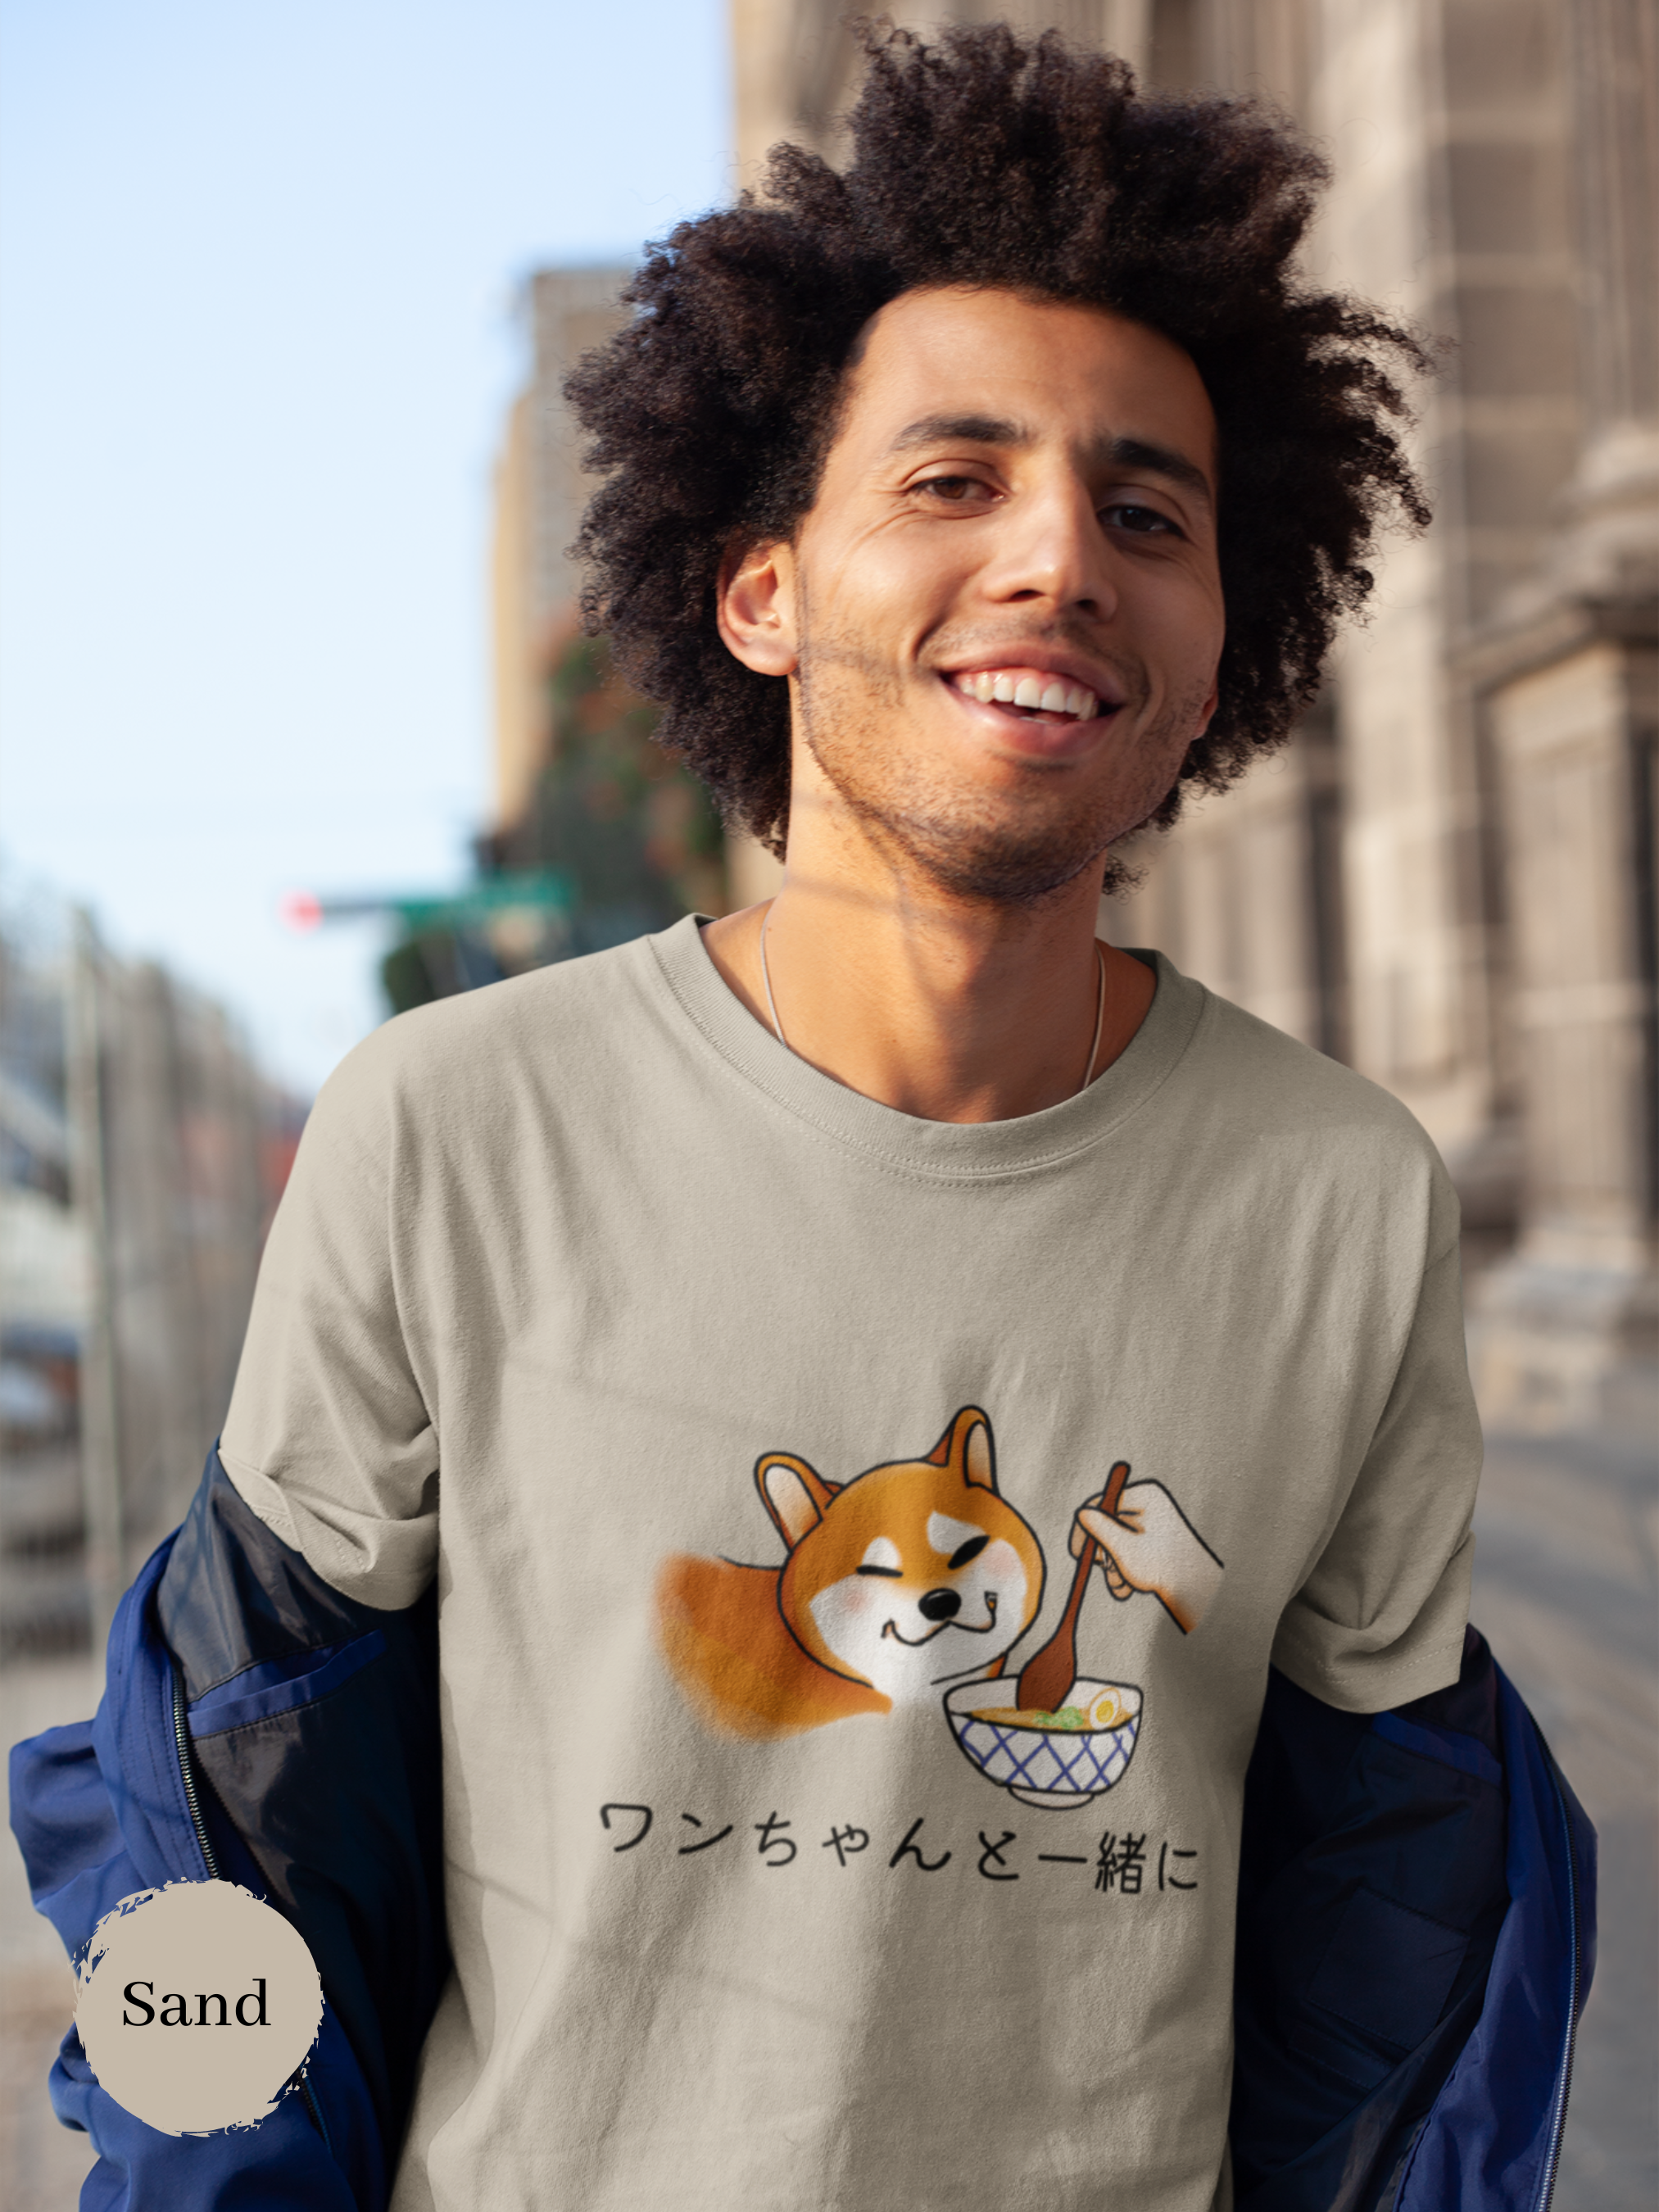 Ramen T-shirt: Shiba Inu and Ramen Art - Japanese-Inspired Foodie Shirt